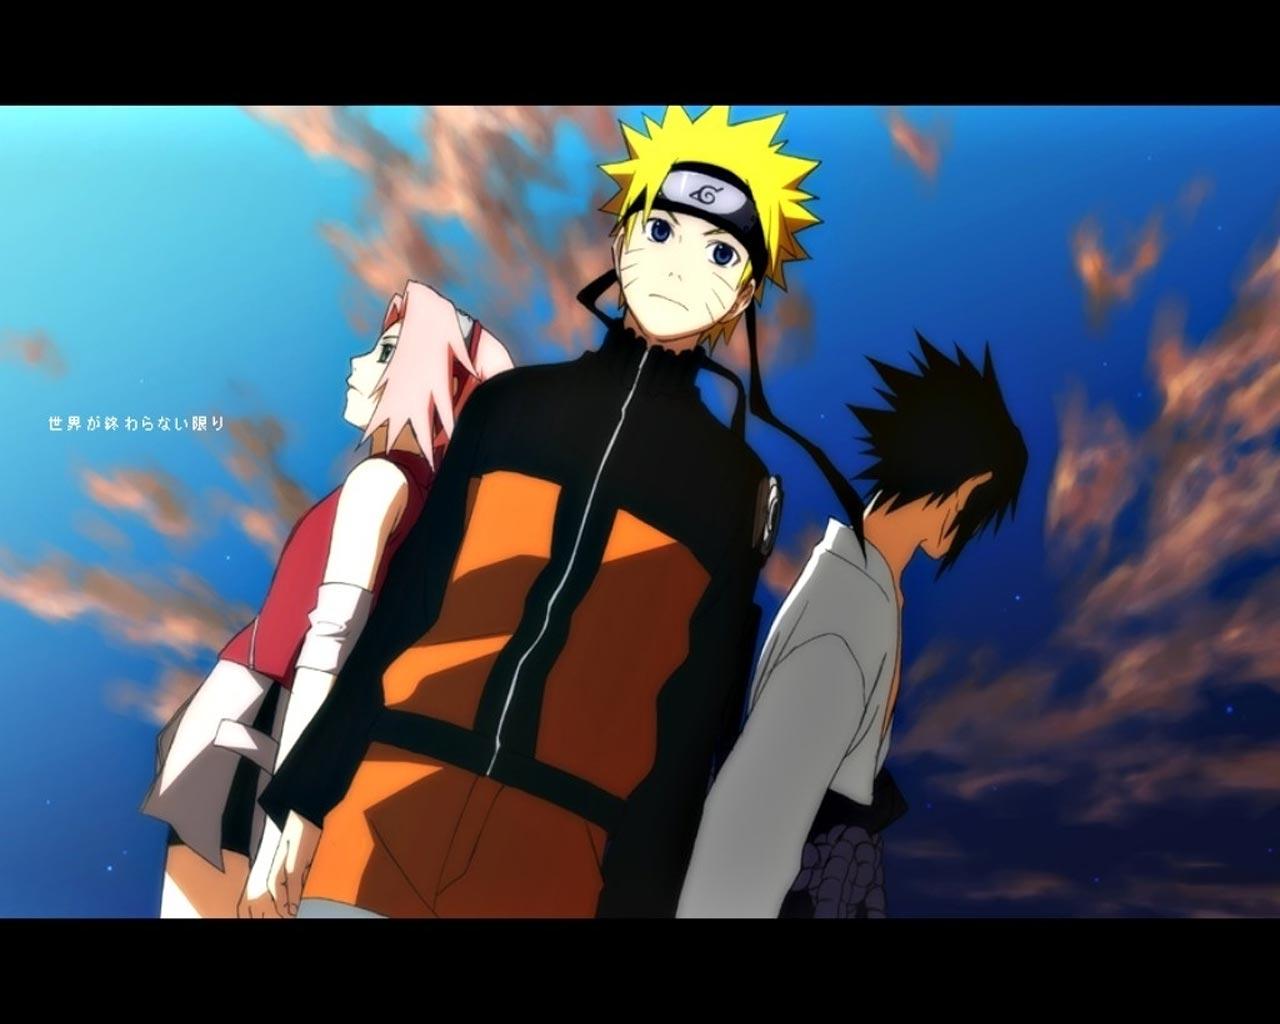 Download Naruto Shippuden Free Anime Wallpaper 1280x1024. Full HD